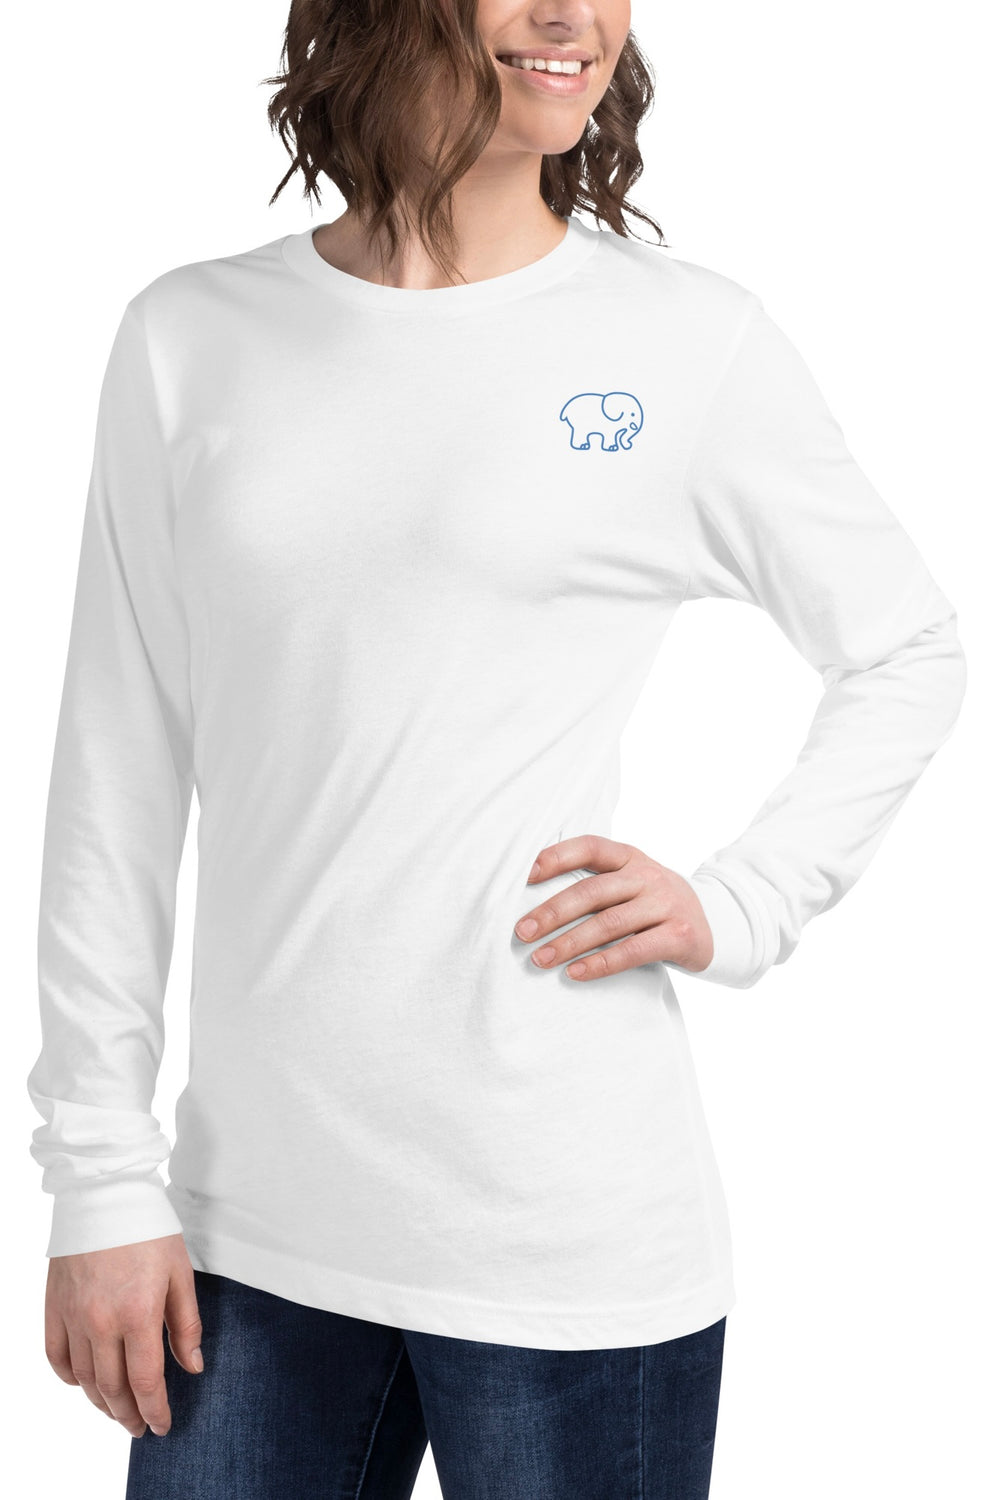 Snow Sports Unisex Long Sleeve T-Shirt